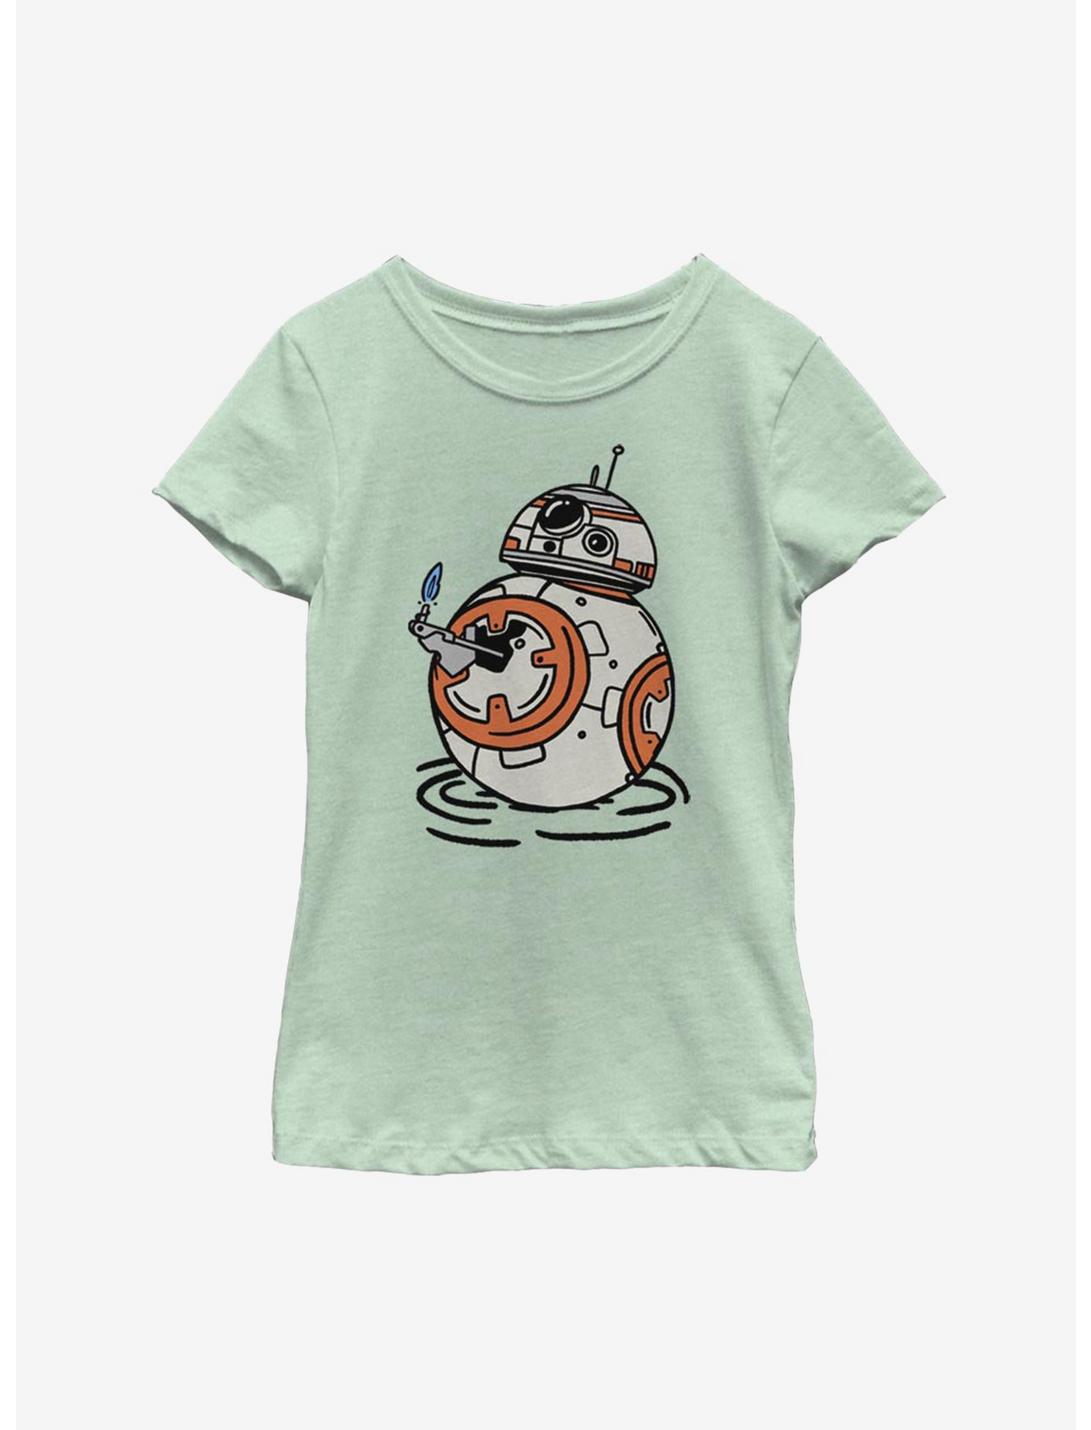 Star Wars Episode IX The Rise Of Skywalker BB Doodles Youth Girls T-Shirt, MINT, hi-res